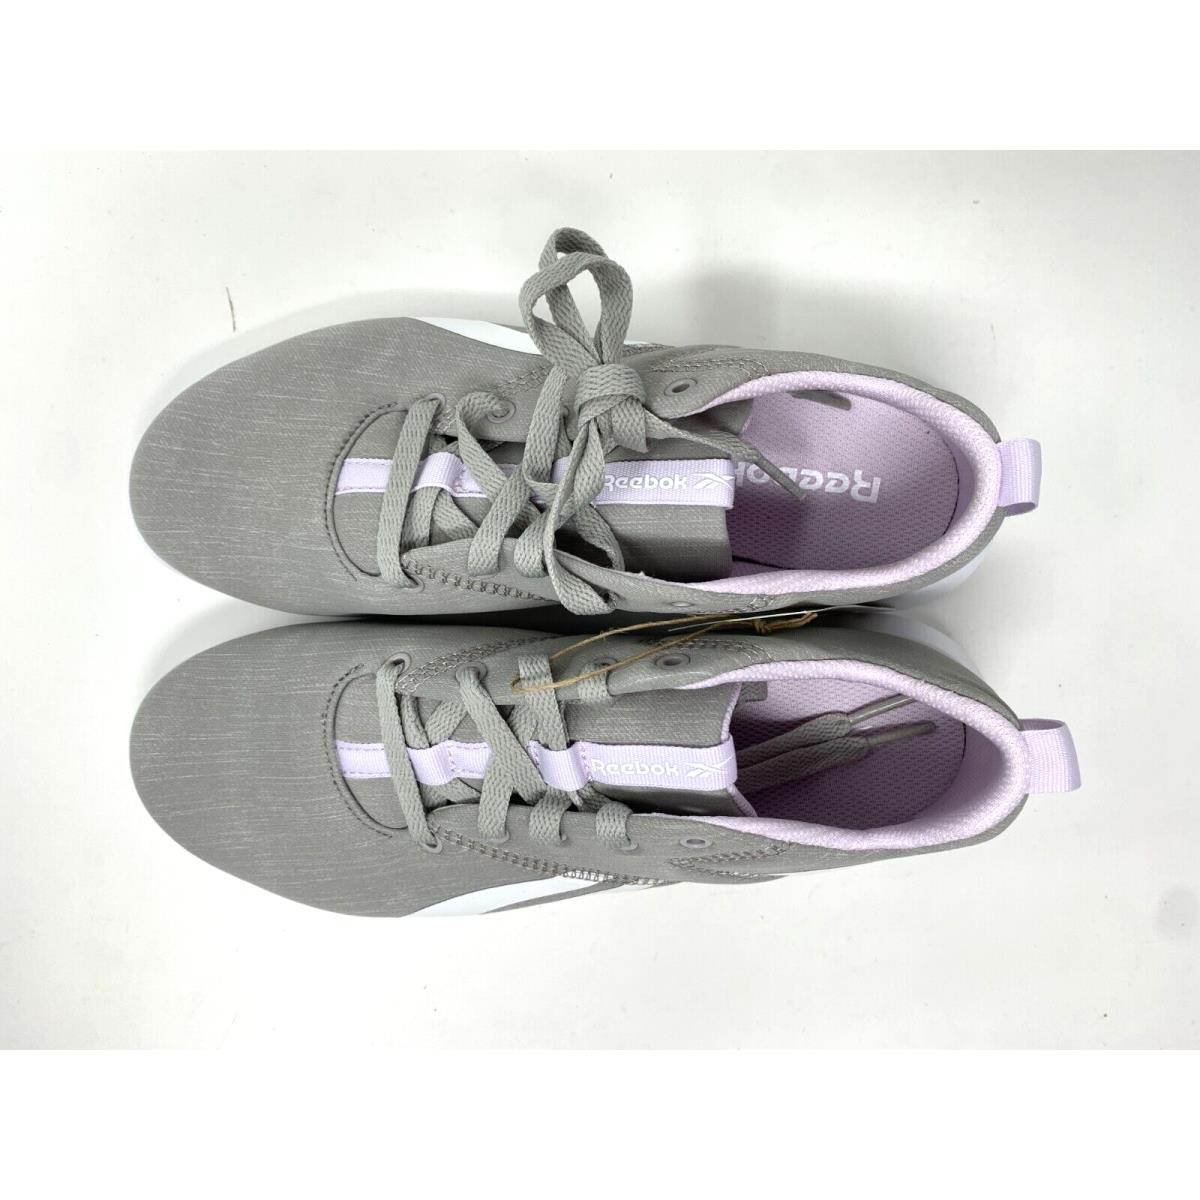 Reebok shoes Ardara - Gray 0